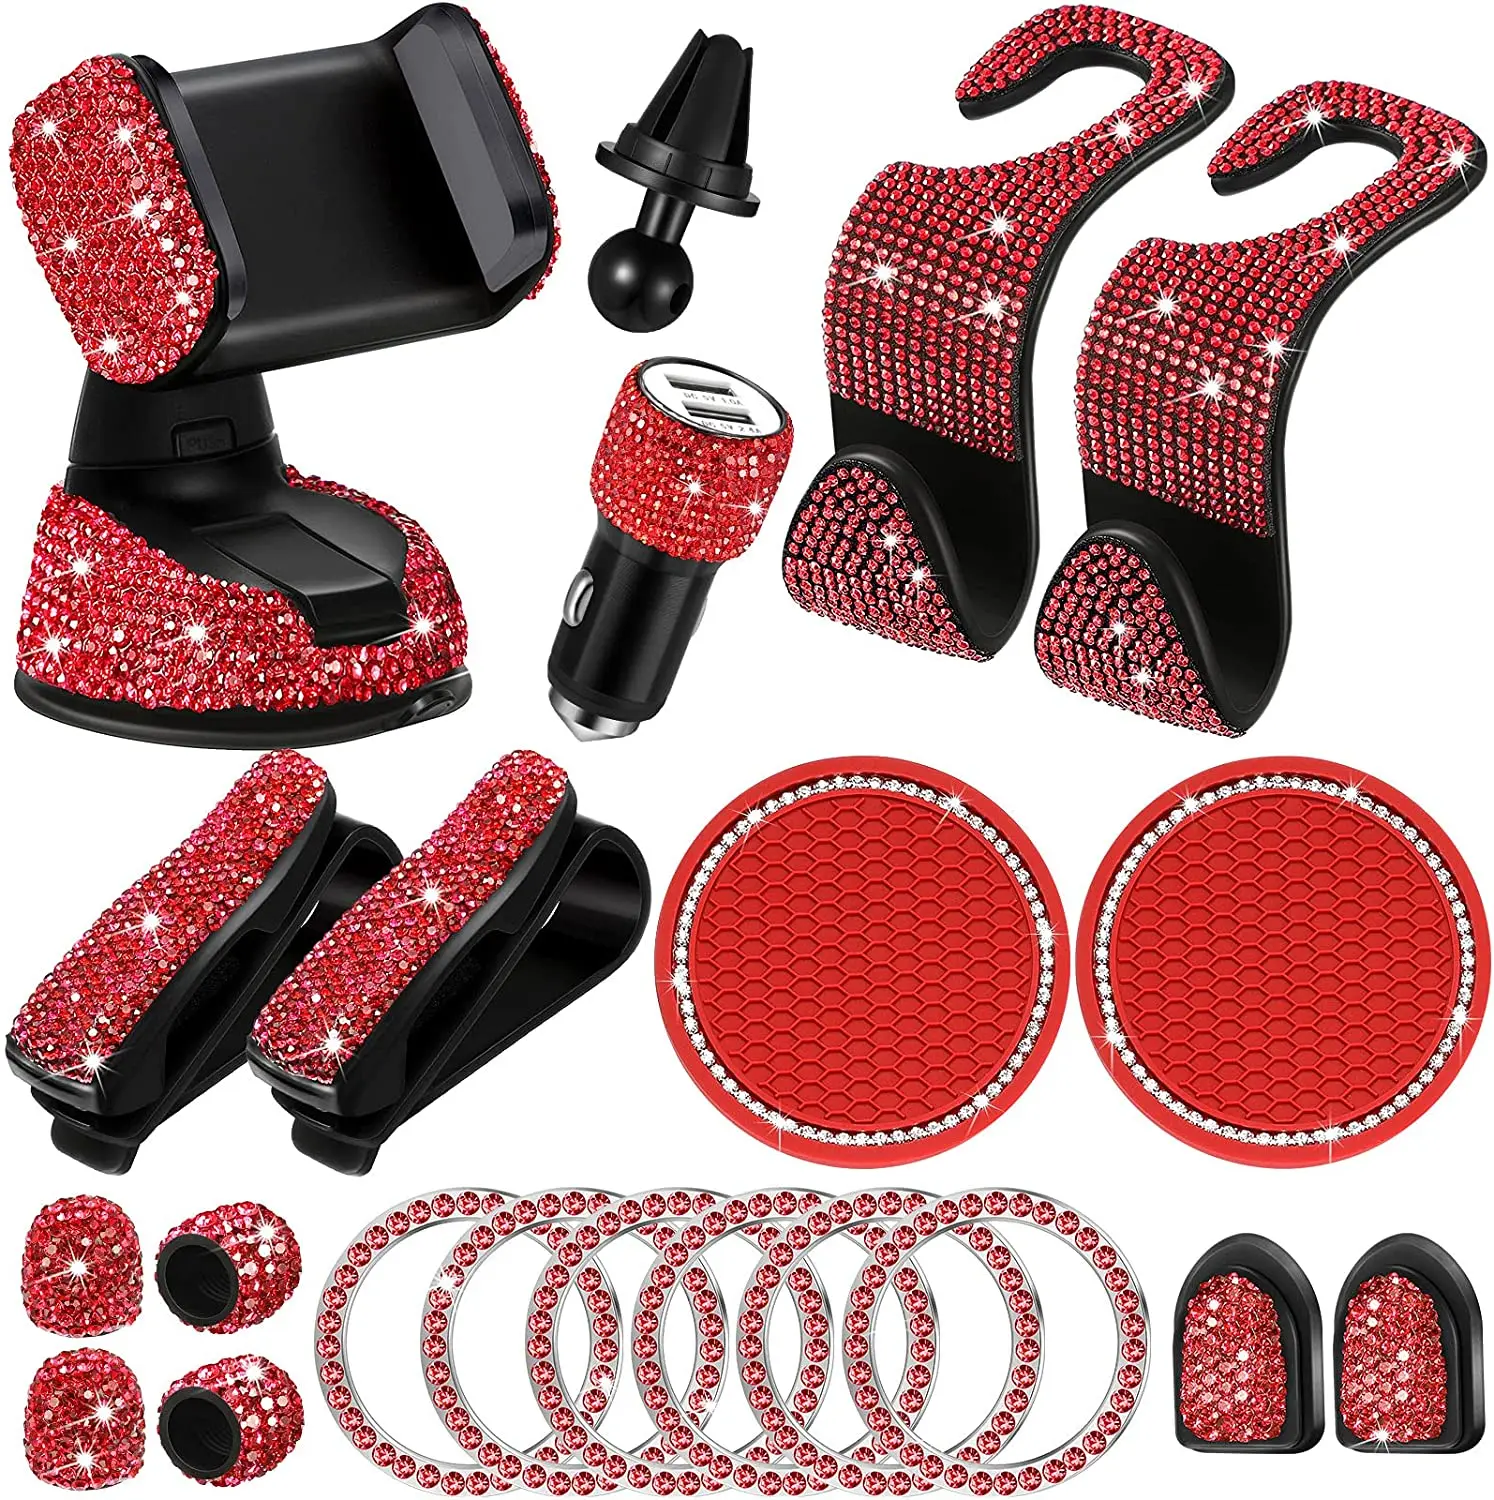 Red Car Styling Accessories for Women Interior Cute Bling Set Glitter Rhinestone Diamond Decorations Universal Use 20pcs | Автомобили и